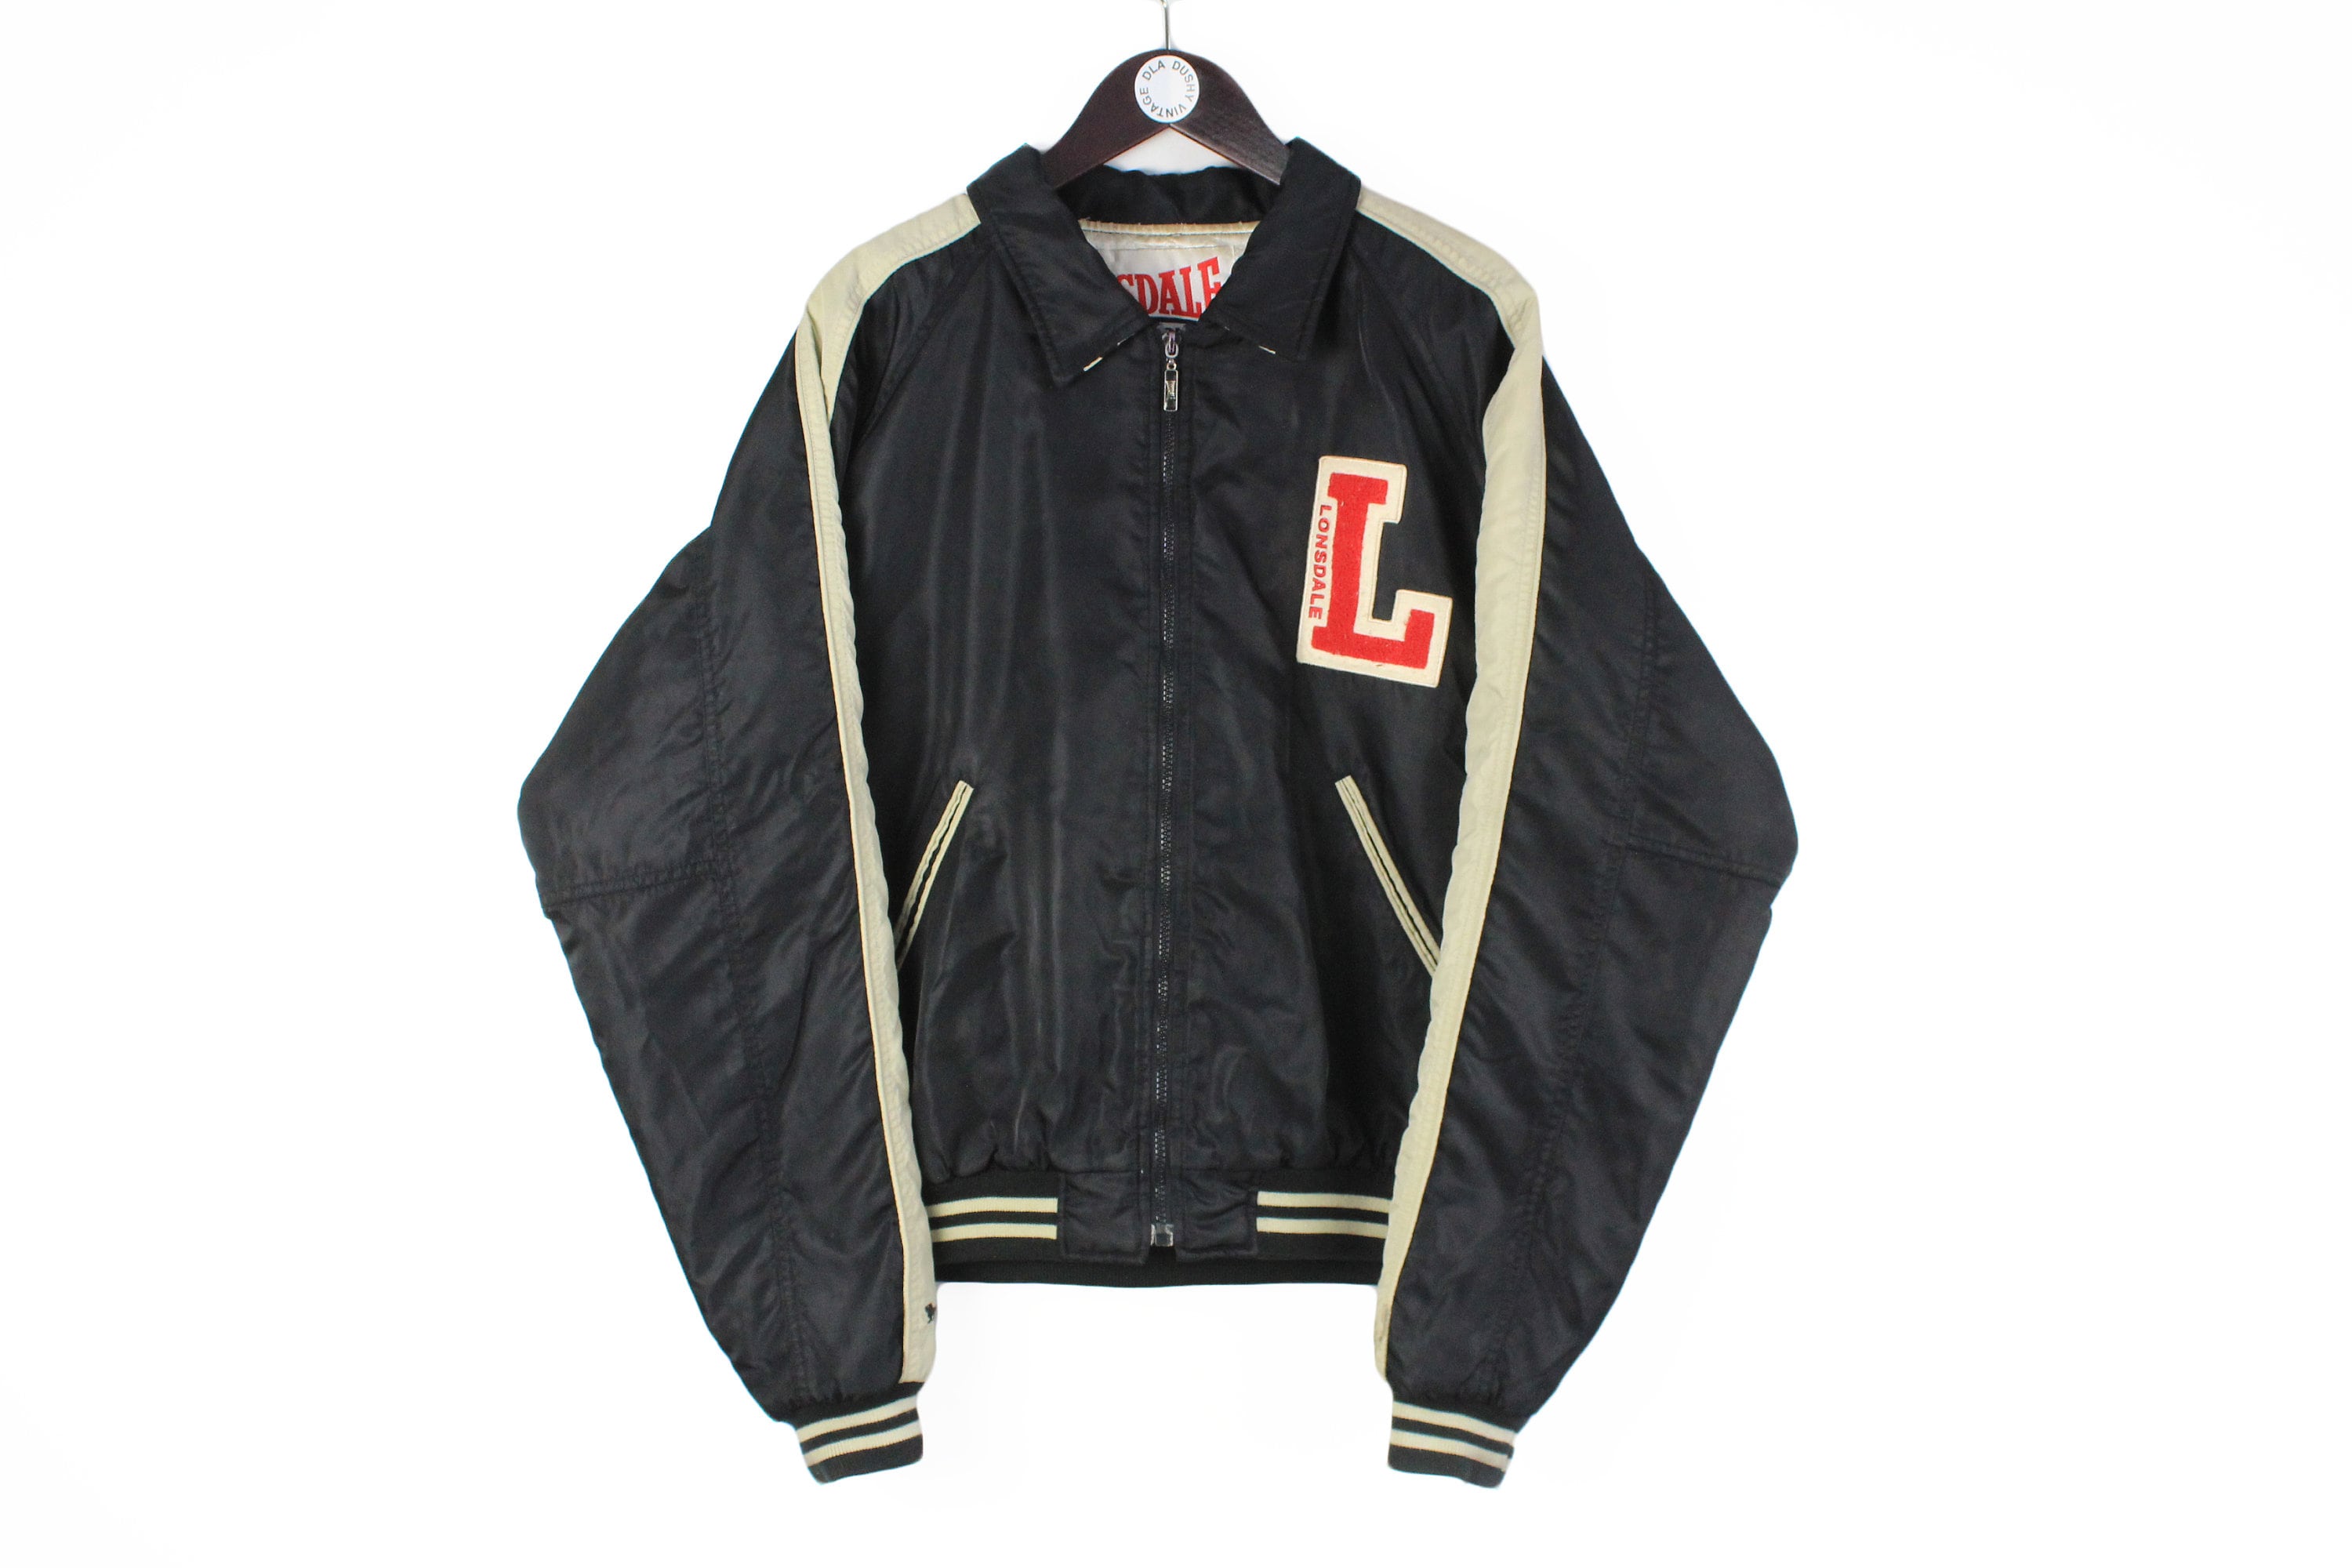 Vintage LONSDALE Jacket Big Wear Zip Retro XL Sport Size 90\'s Style Black - Skinhead Full Authentic Men\'s Logo UK Etsy Clothing Team Collared Mod